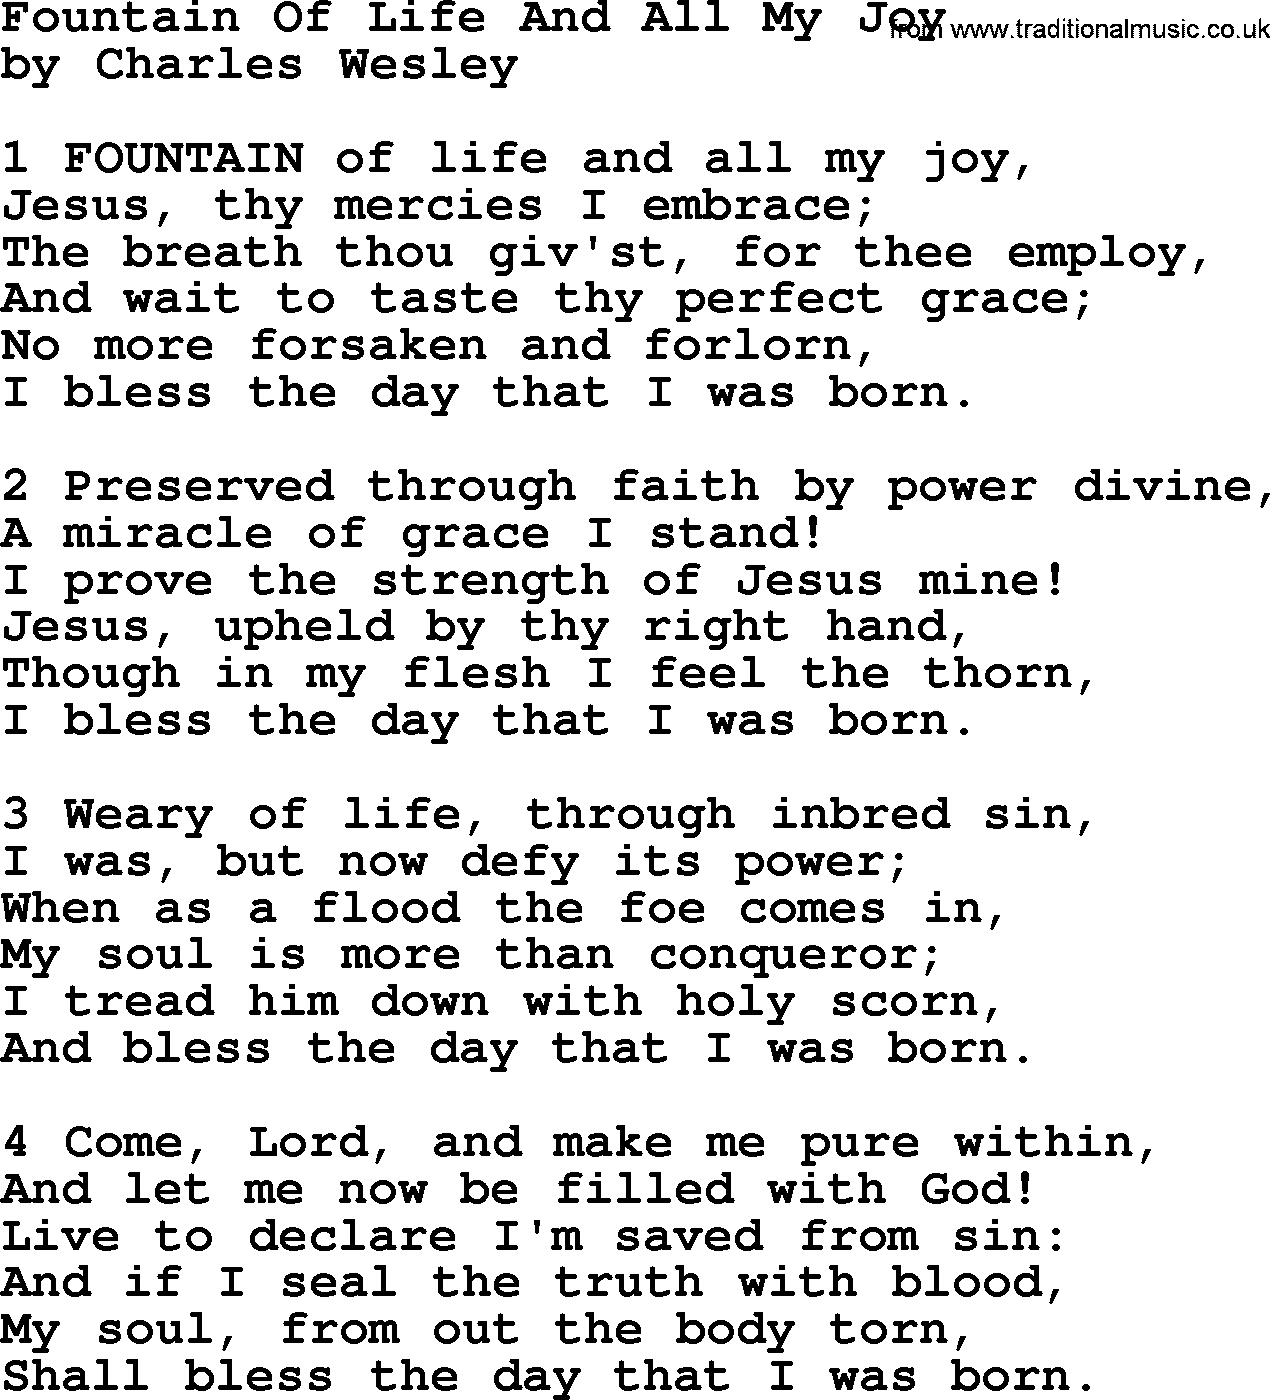 Charles Wesley hymn: Fountain Of Life And All My Joy, lyrics